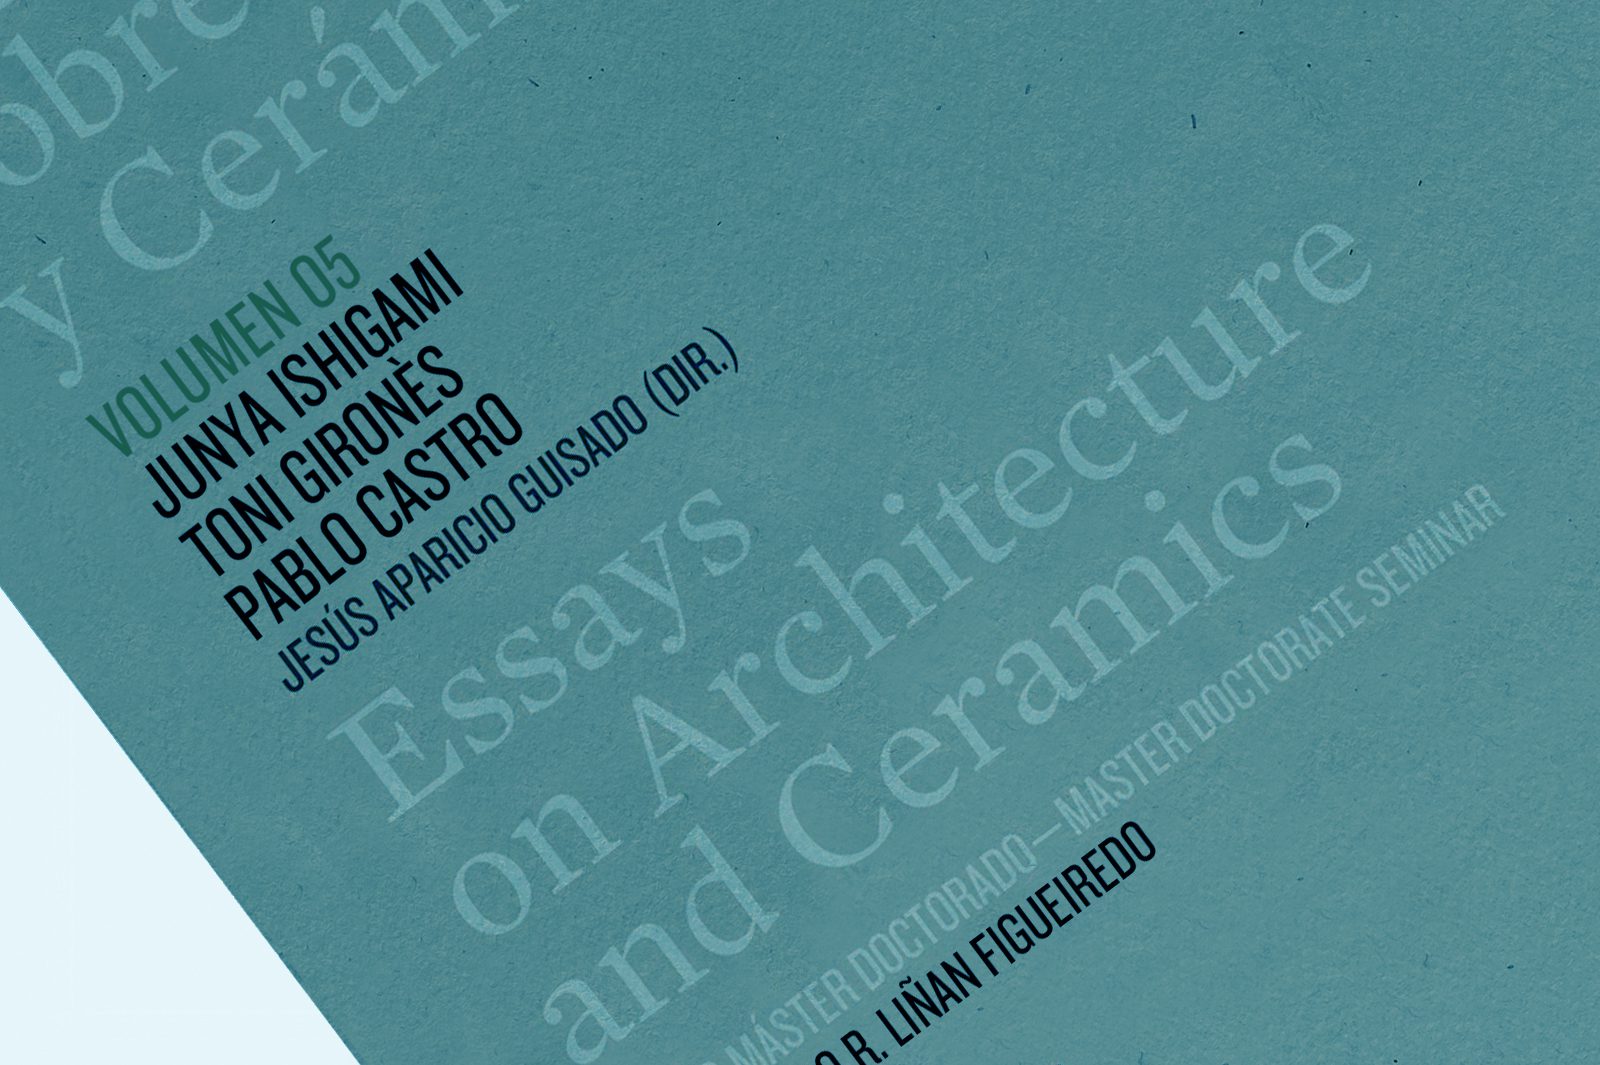 Essays on Architecture and Ceramic V